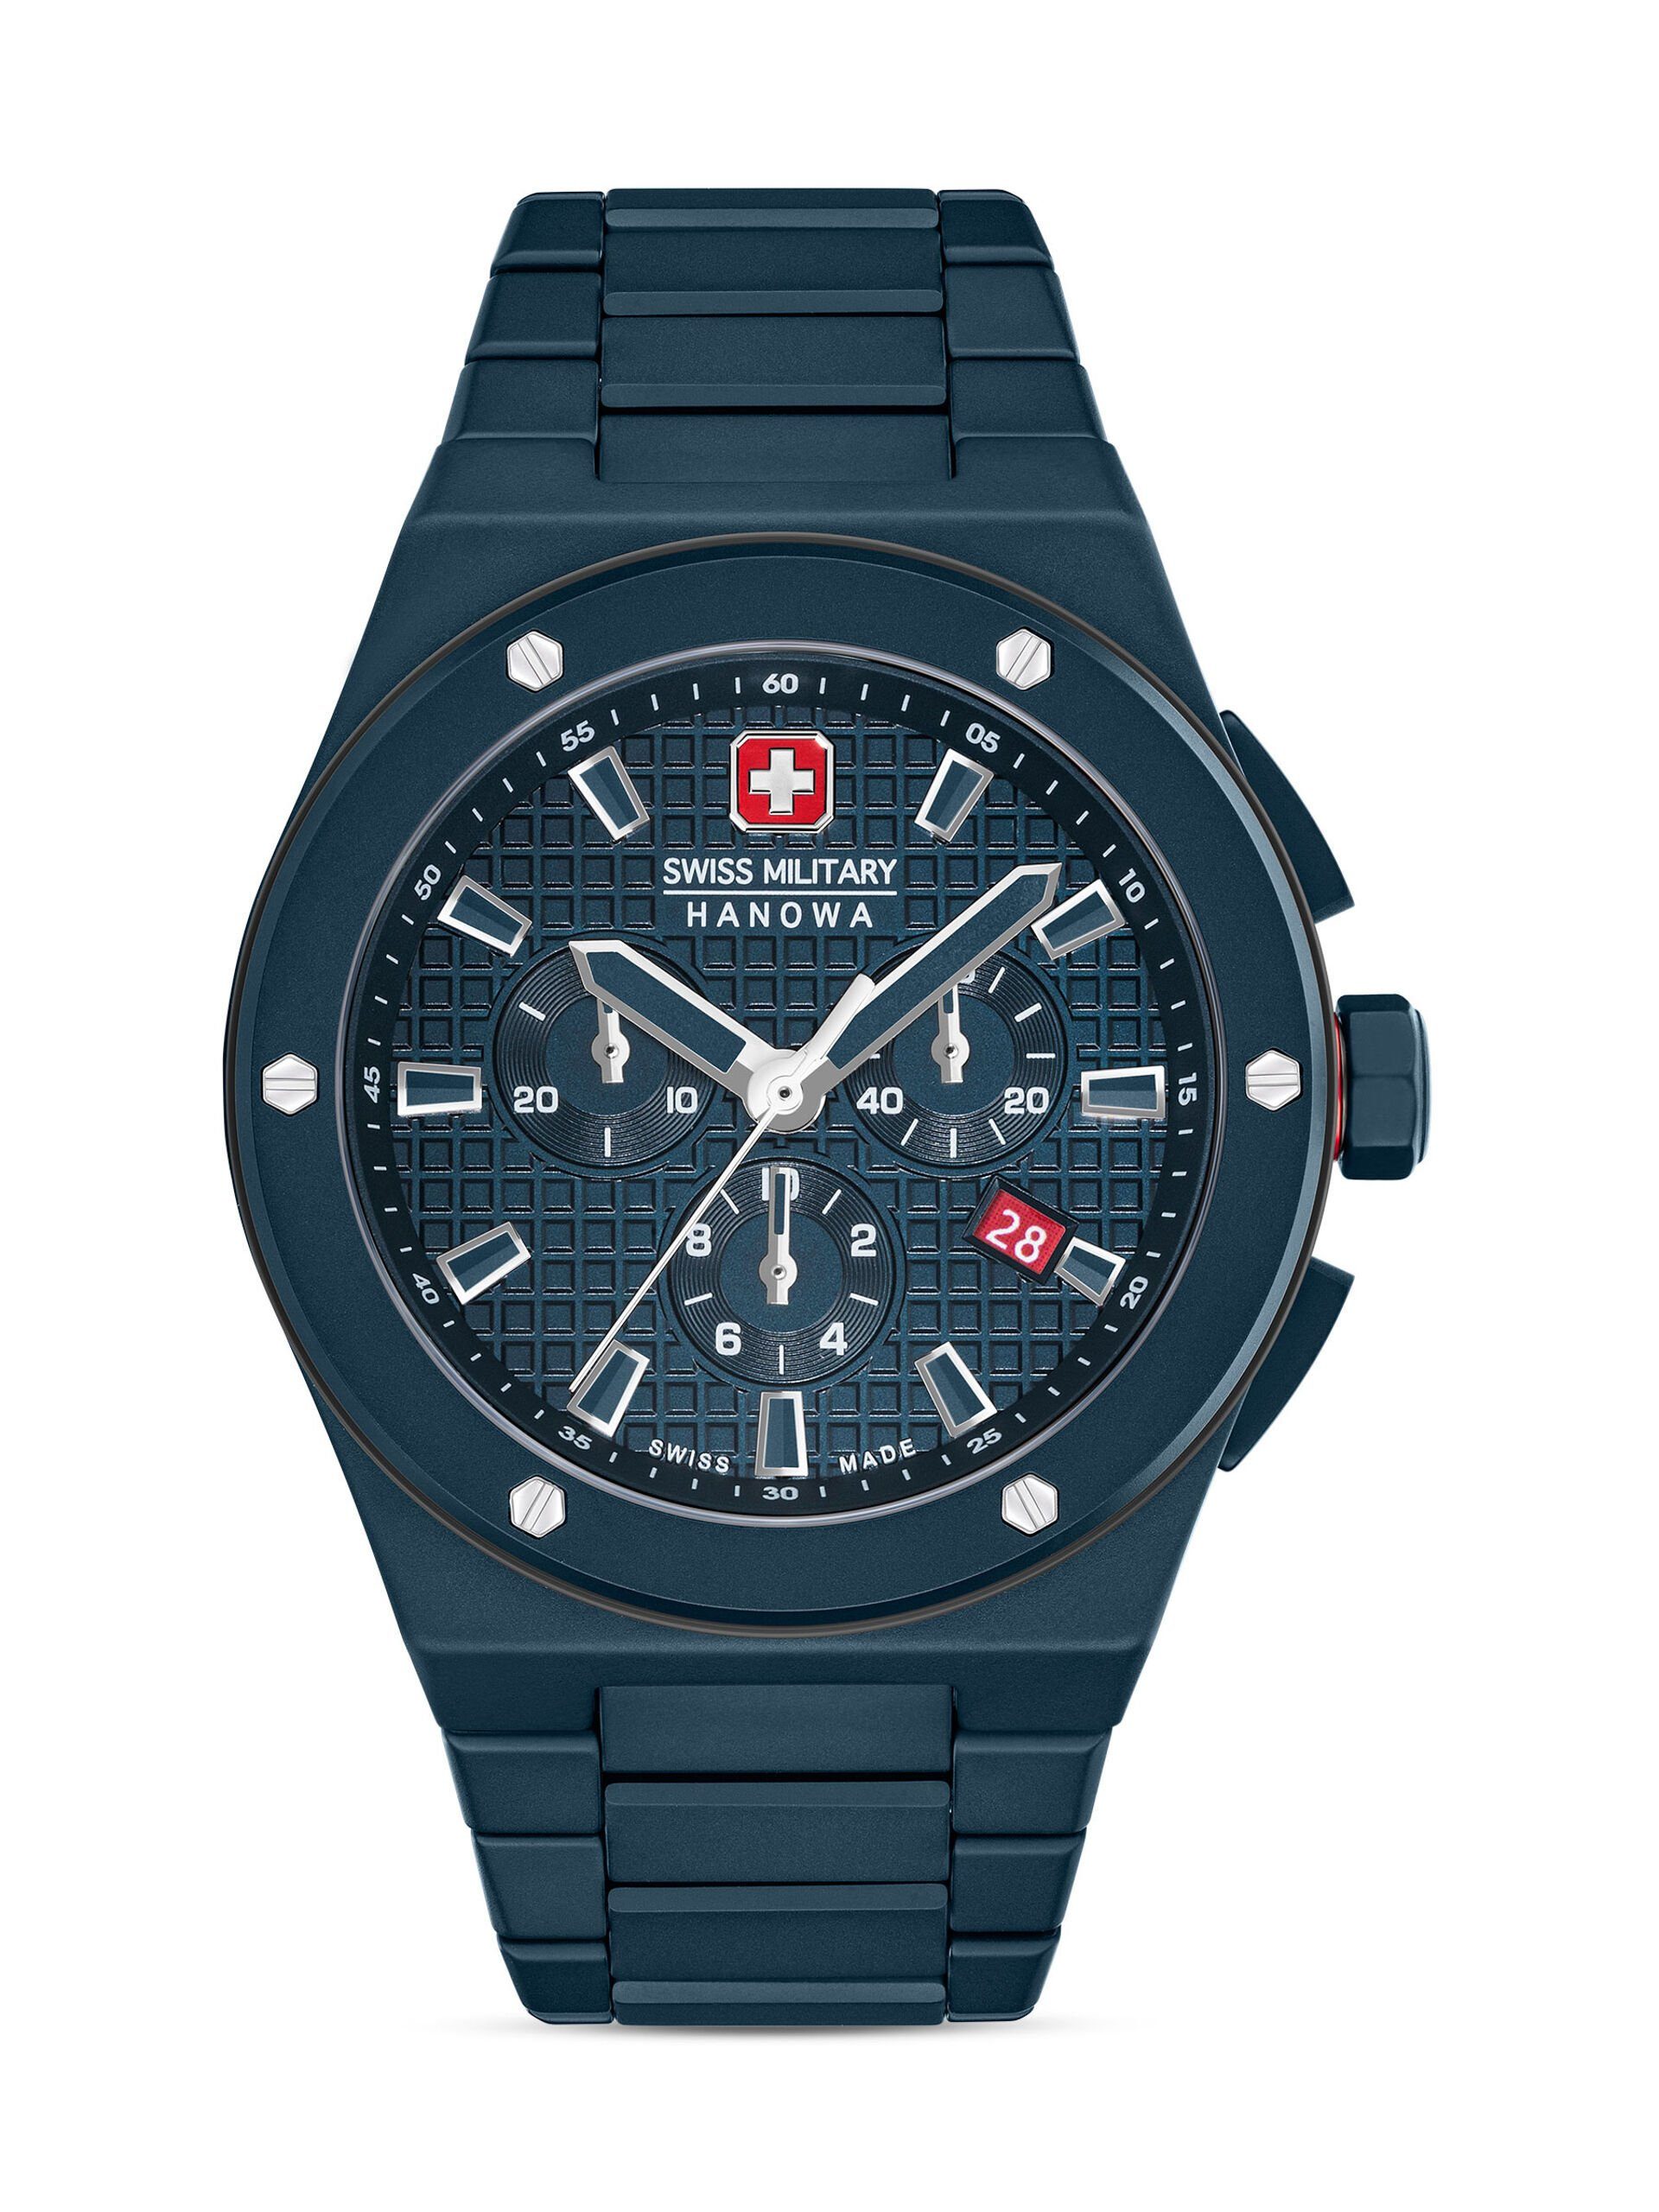 Quarzuhr hochwertigem CERAMIC-Armband mit Blau SIDEWINDER Military Hanowa CERAMIC, Swiss